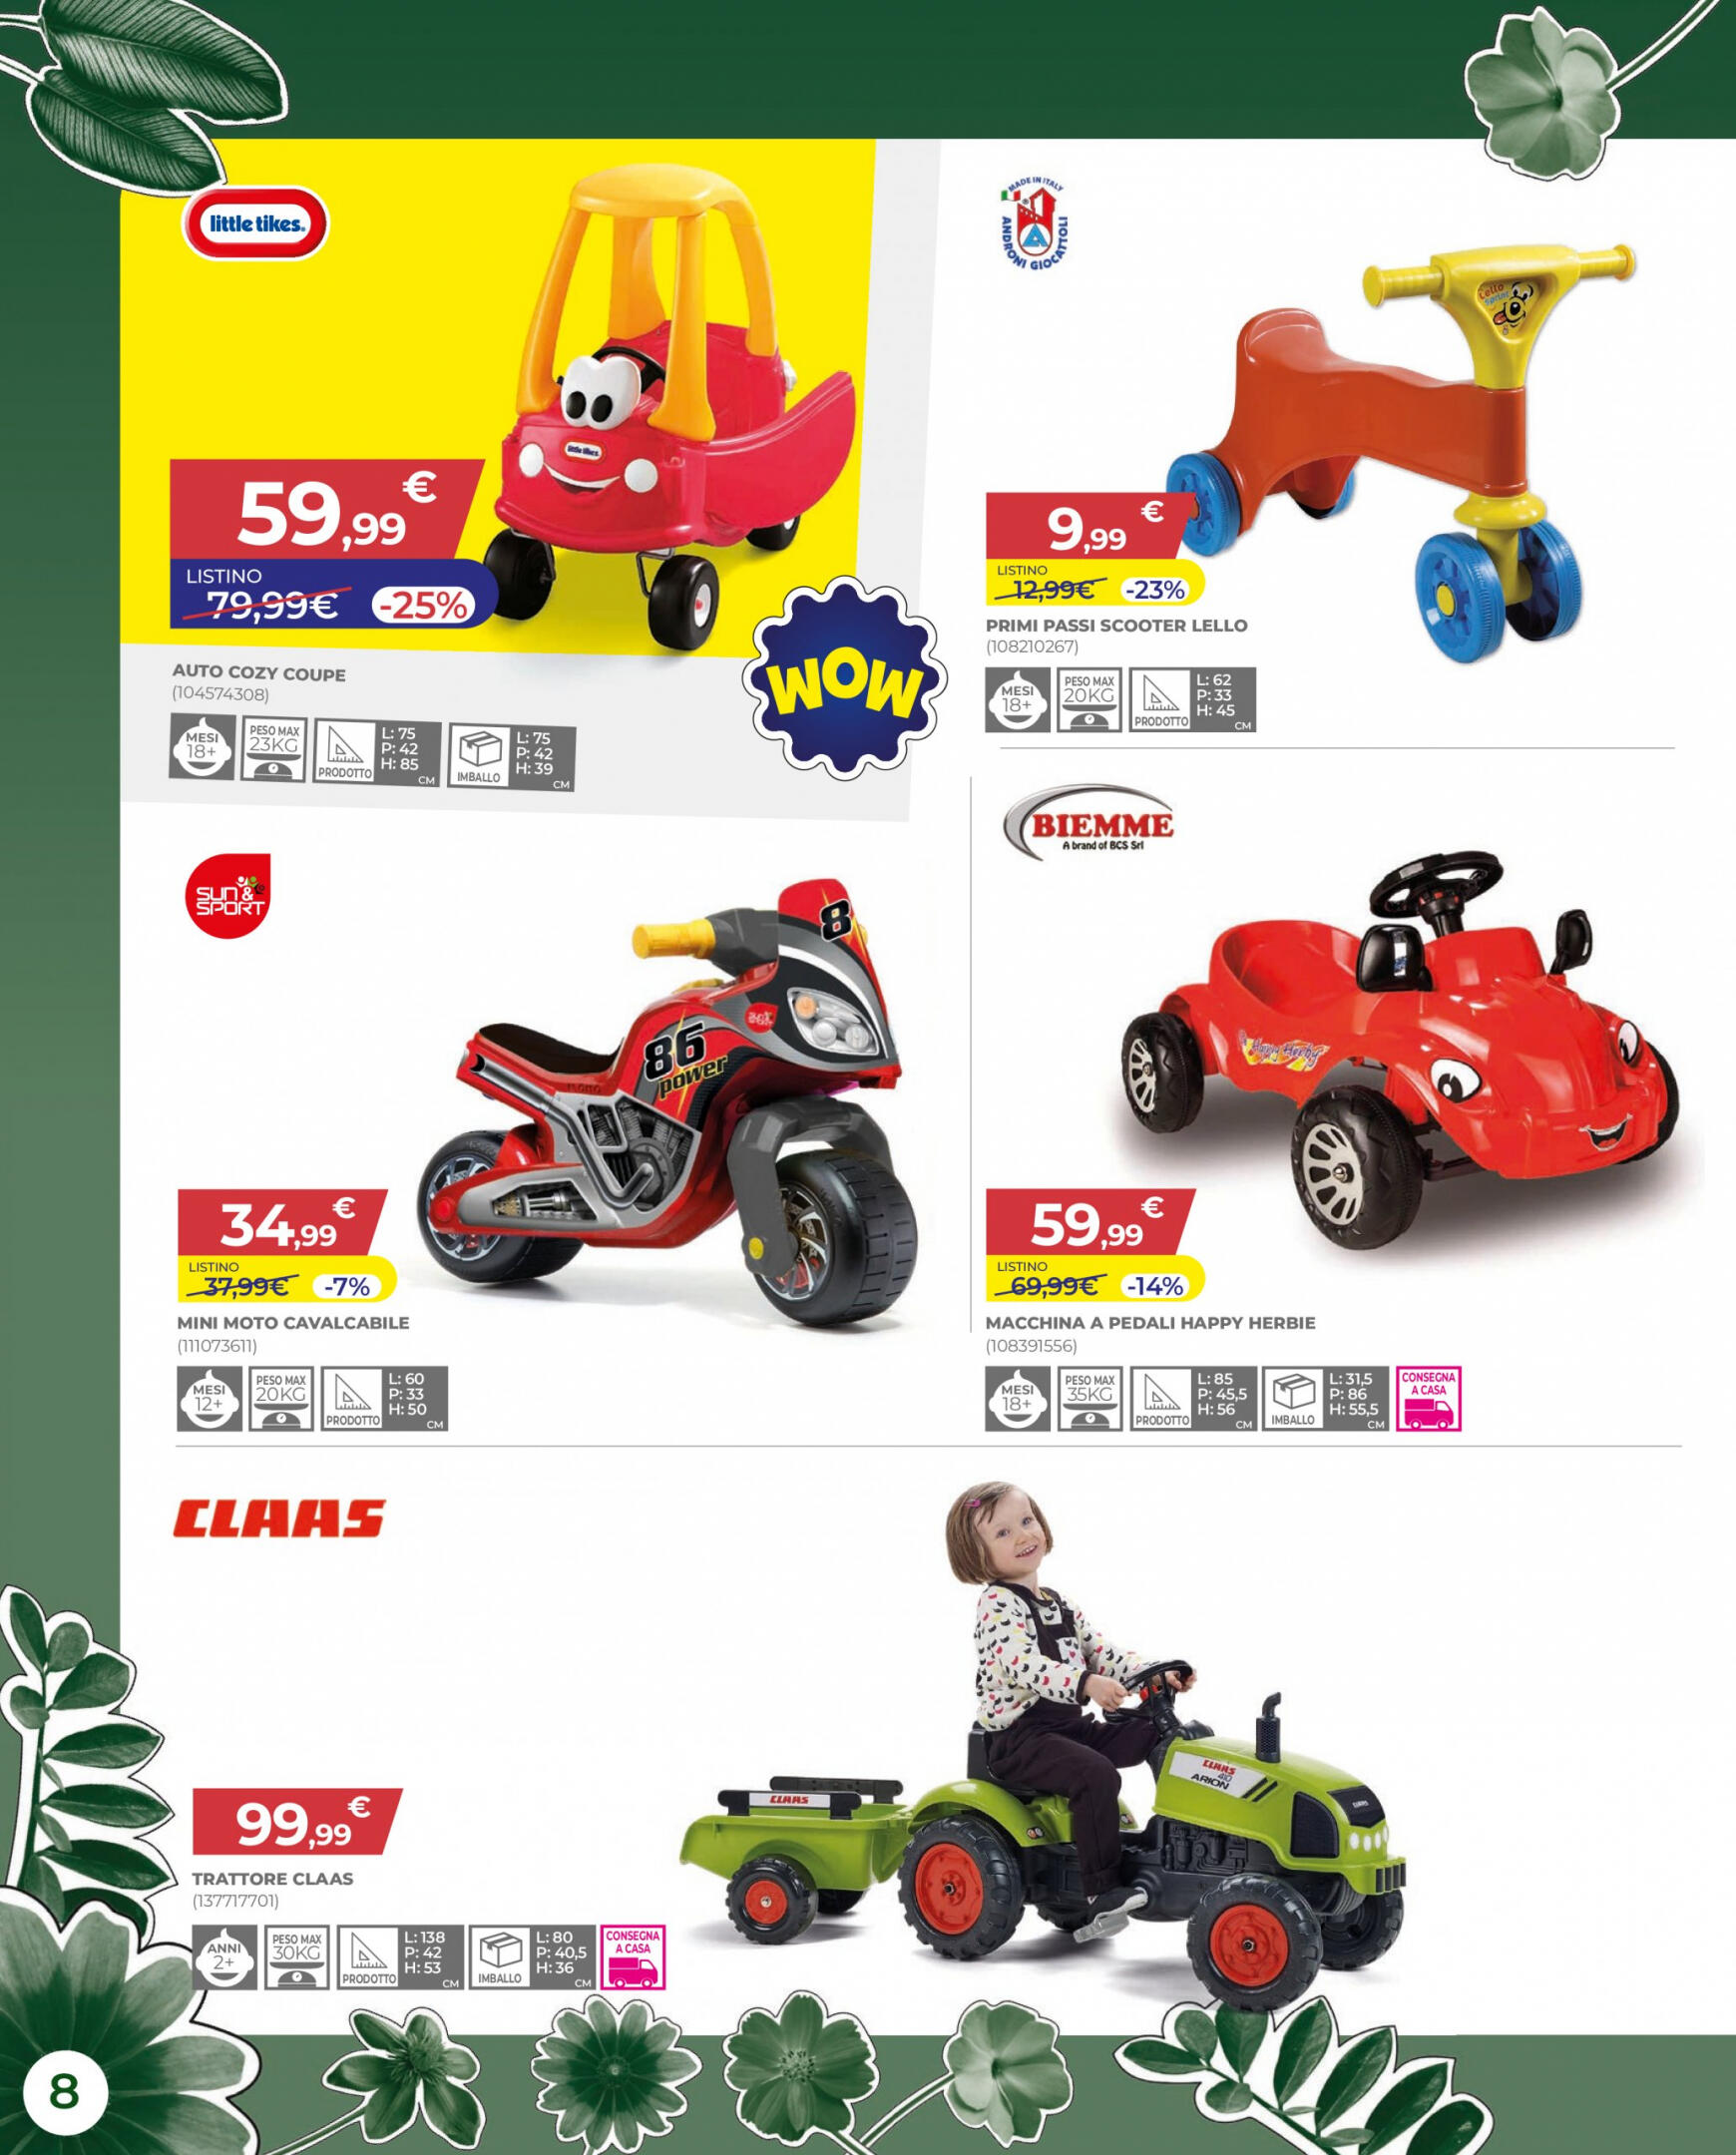 toys-center - Nuovo volantino Toys Center 04.04. - 08.05. - page: 8